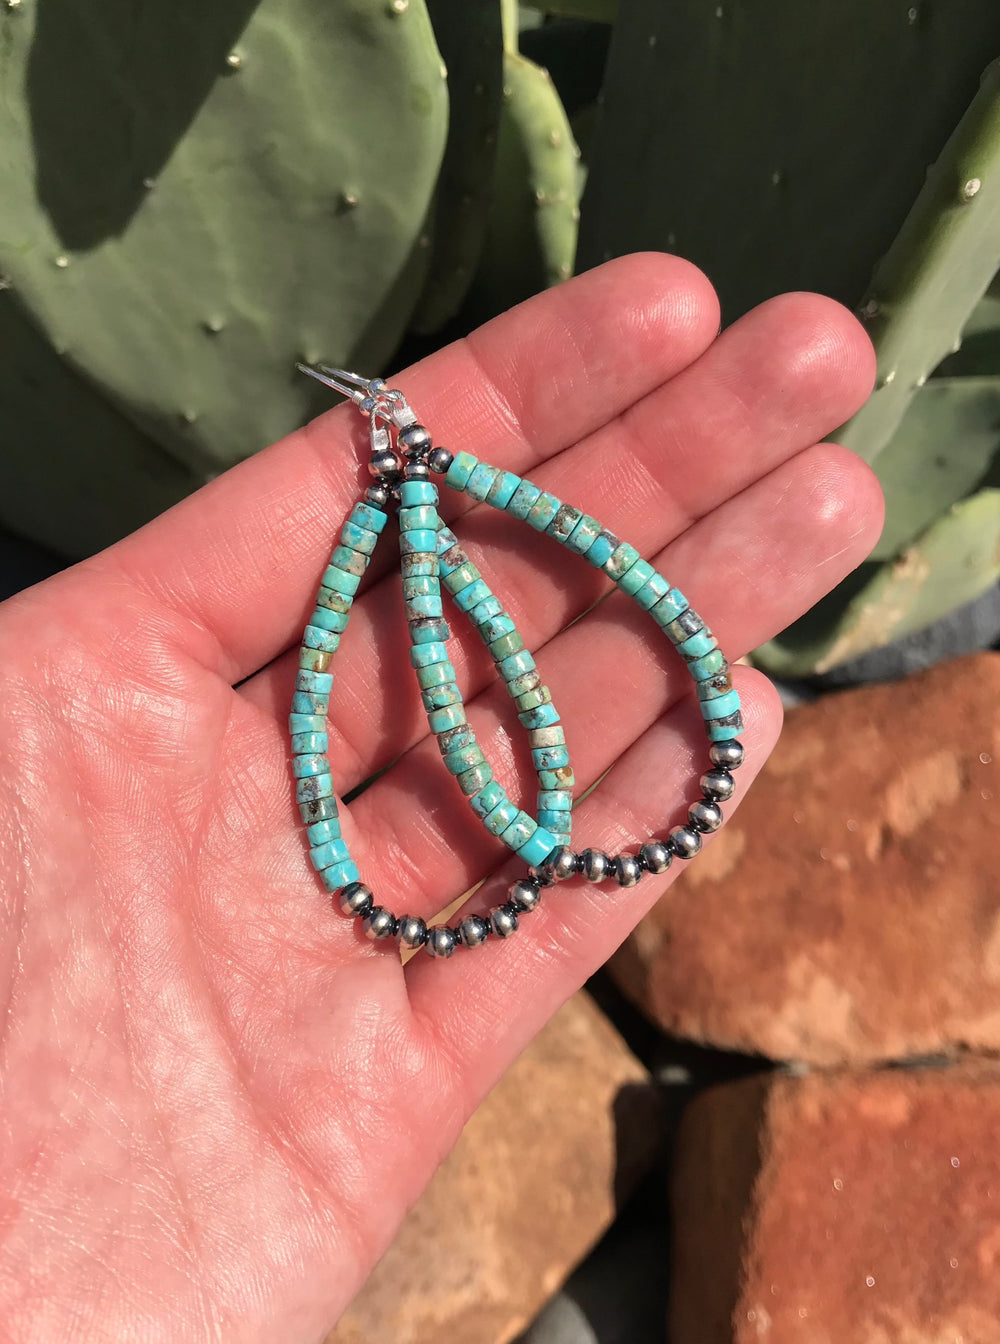 The Ami Earrings-Earrings-Calli Co., Turquoise and Silver Jewelry, Native American Handmade, Zuni Tribe, Navajo Tribe, Brock Texas